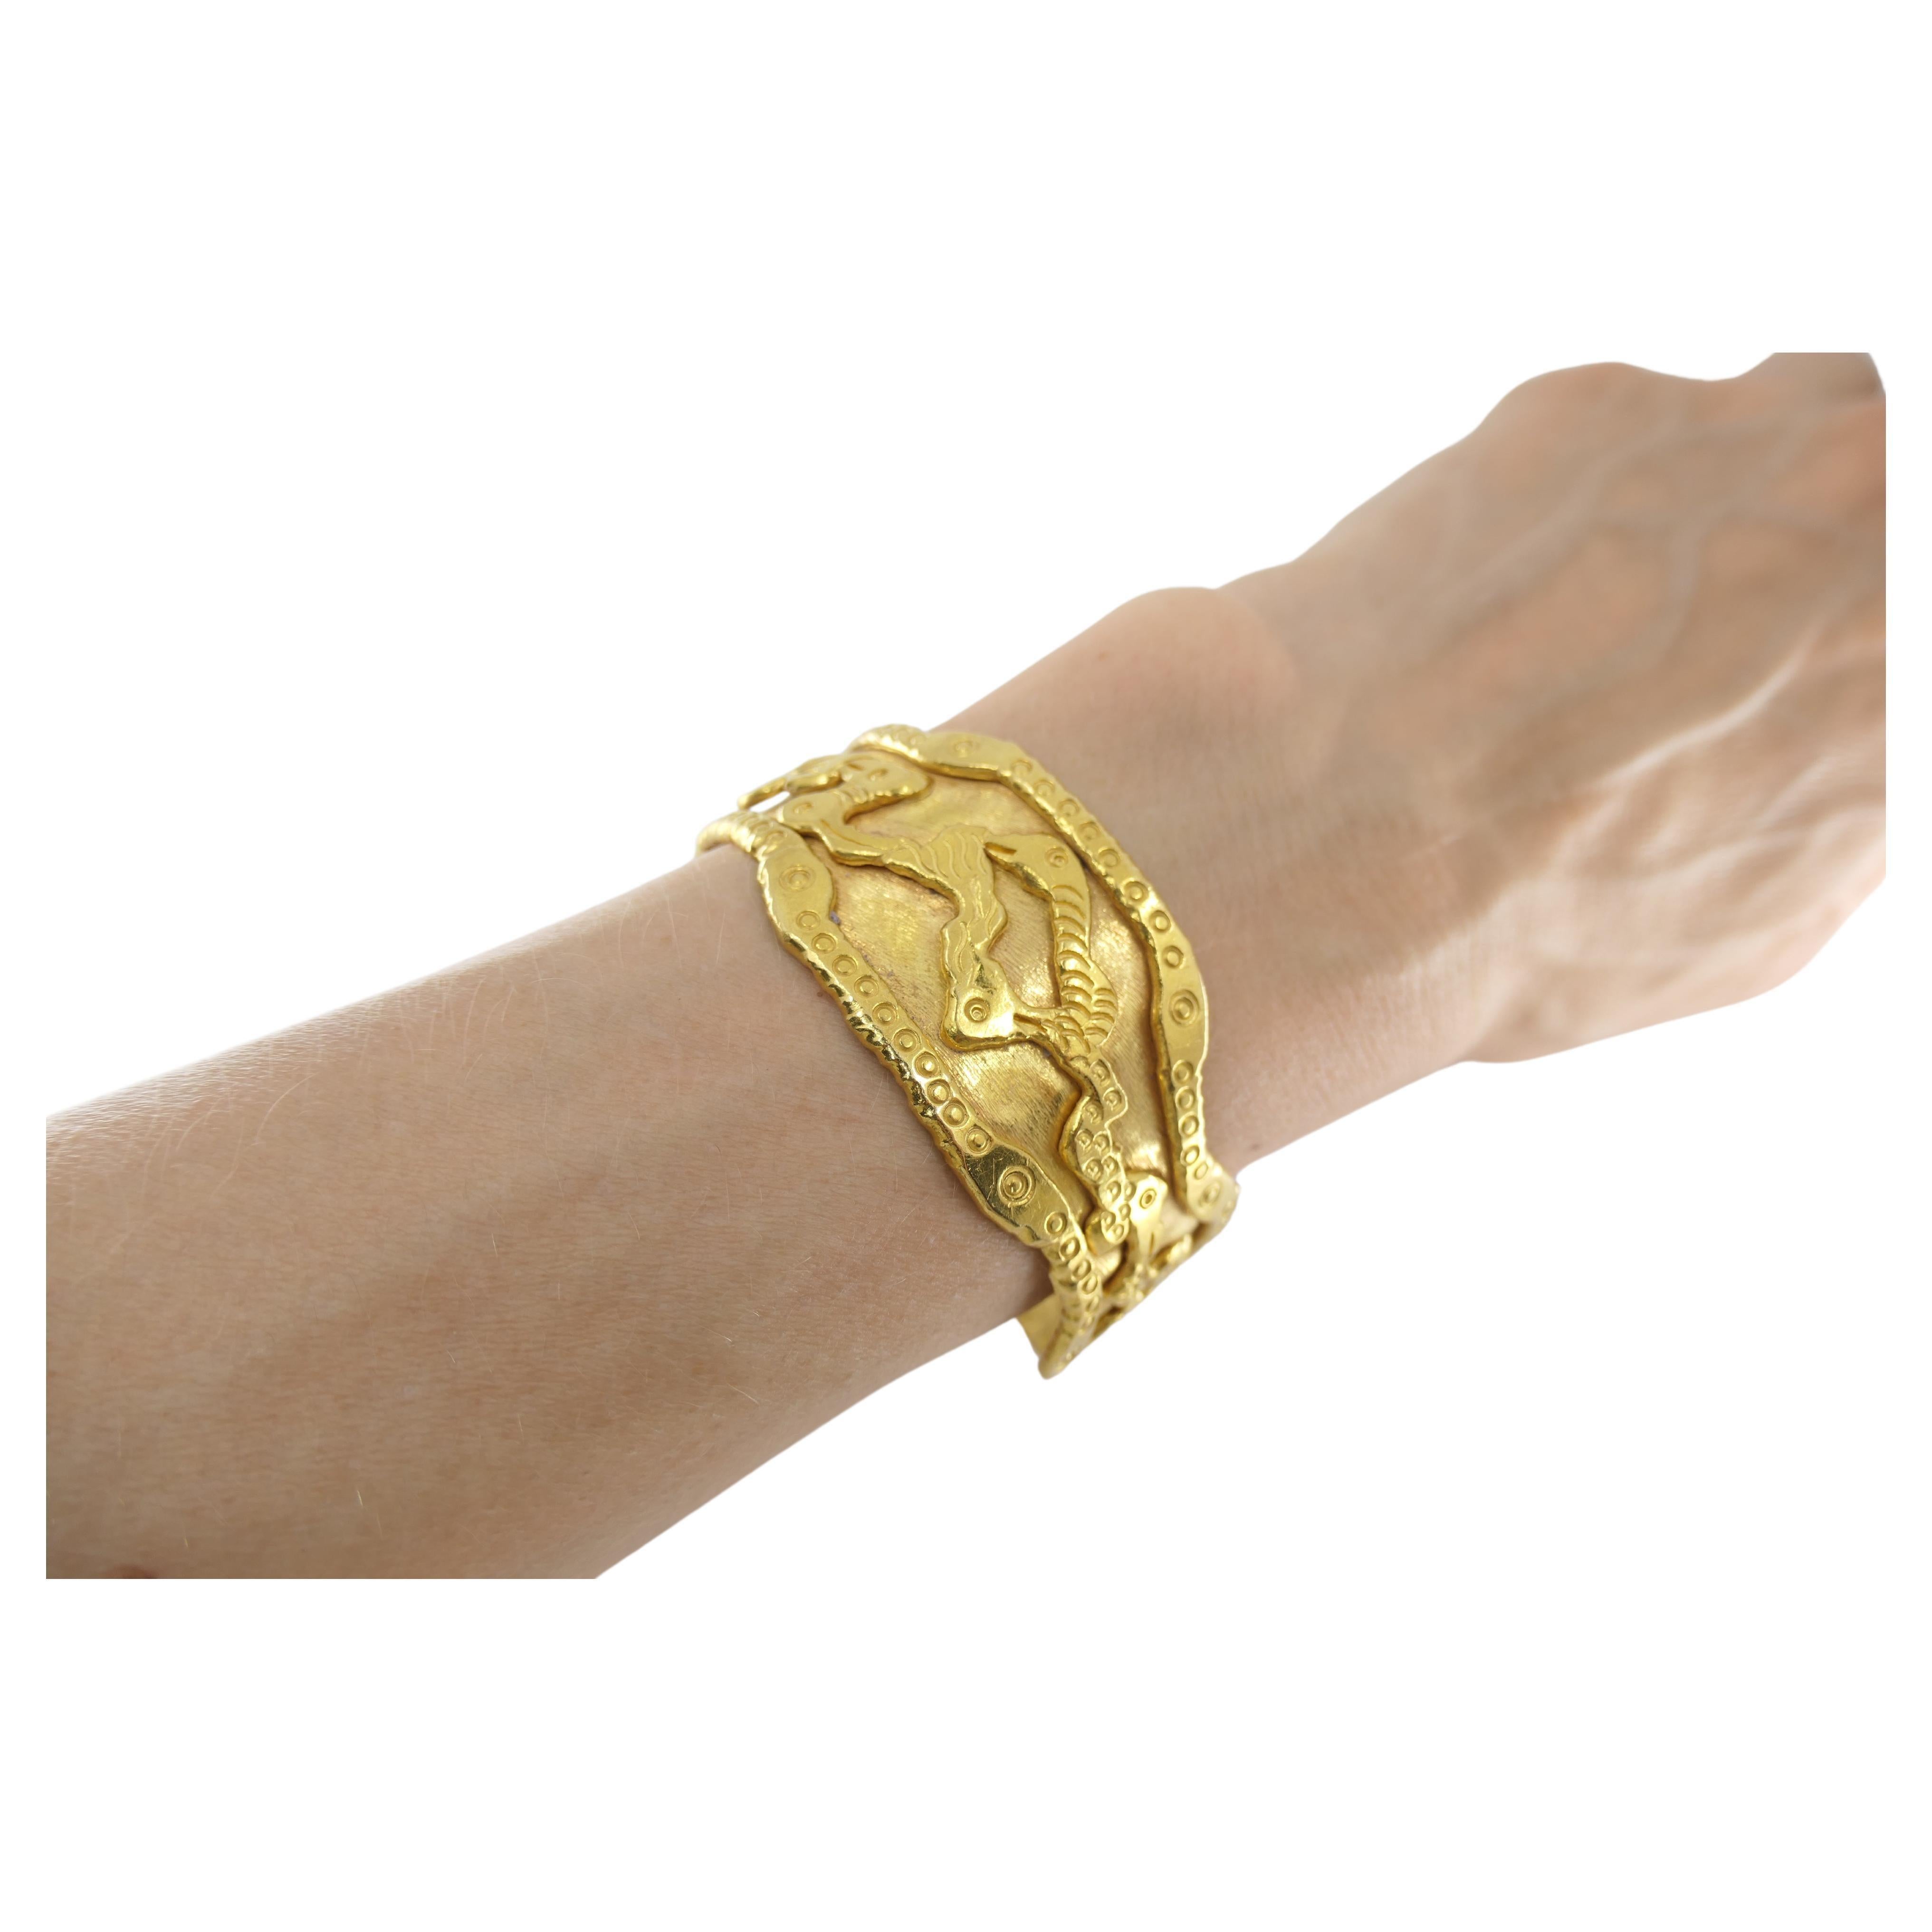 Jean Mahie Charming Monsters Cuff Bracelet 22k Gold 6